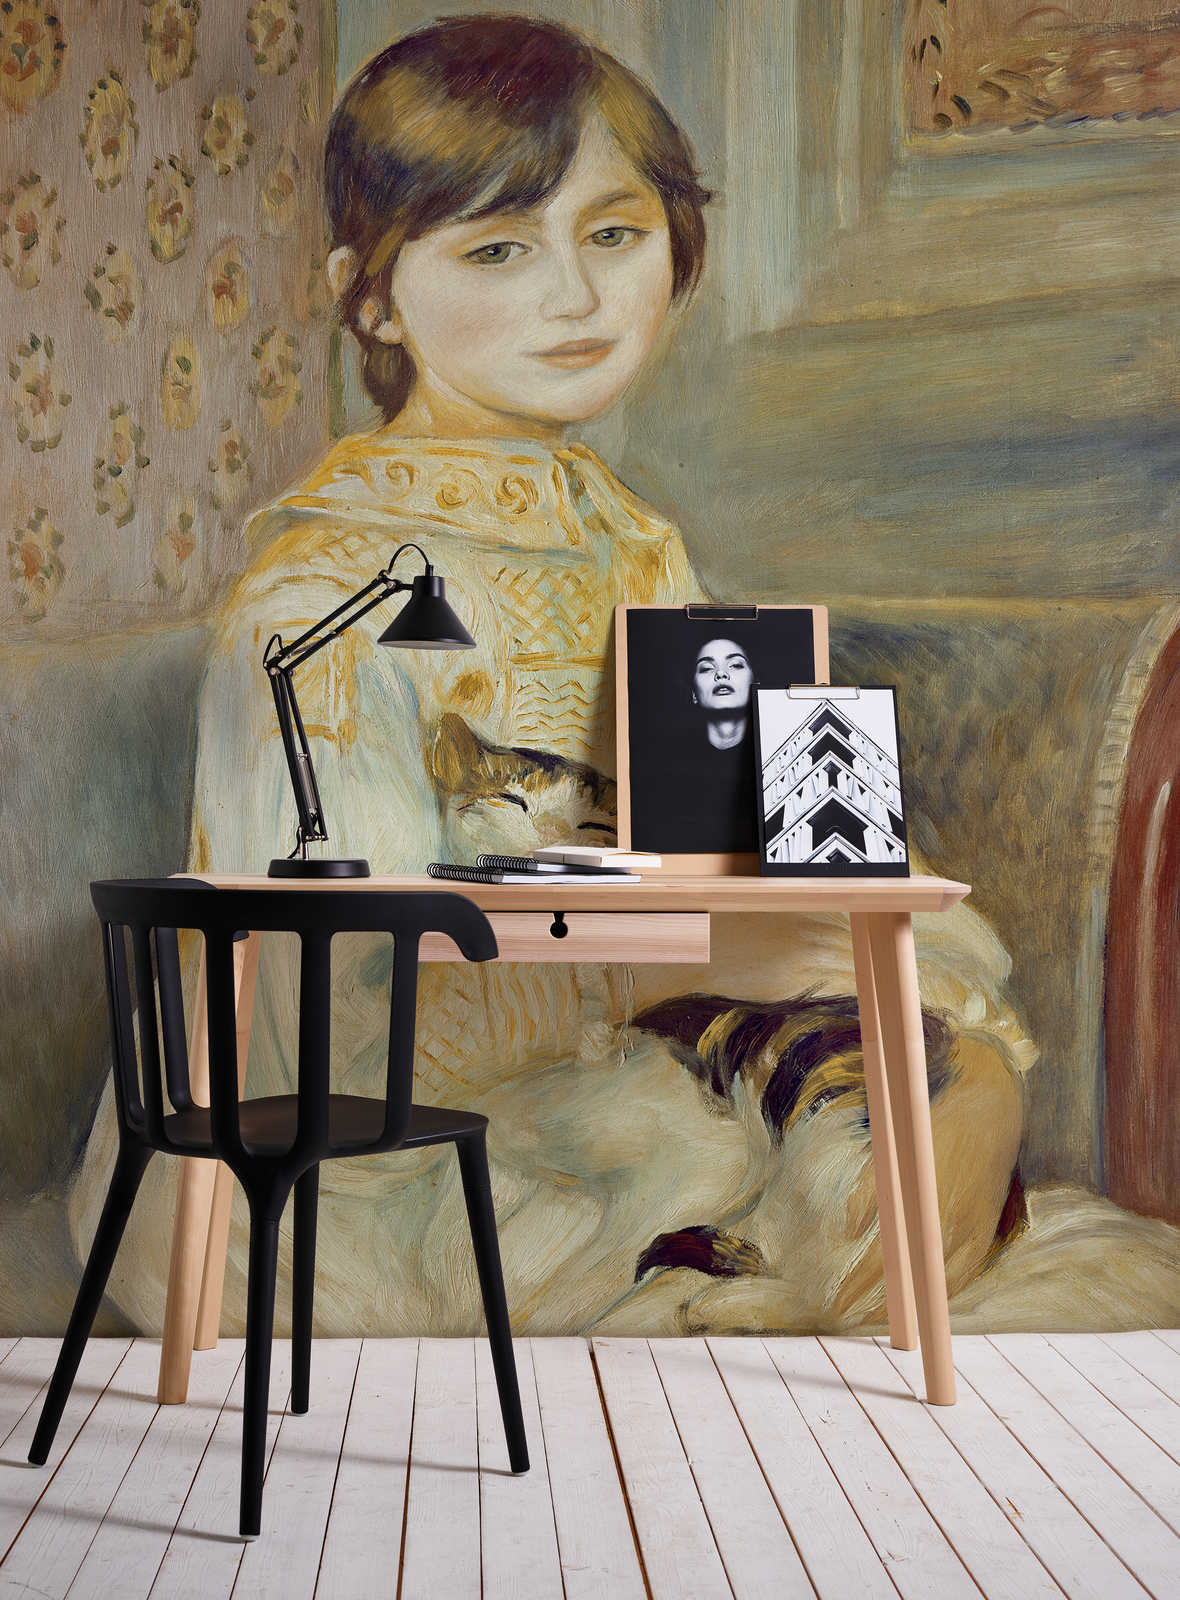             Mademoiselle Julie met kat" muurschildering van Pierre Auguste Renoir
        